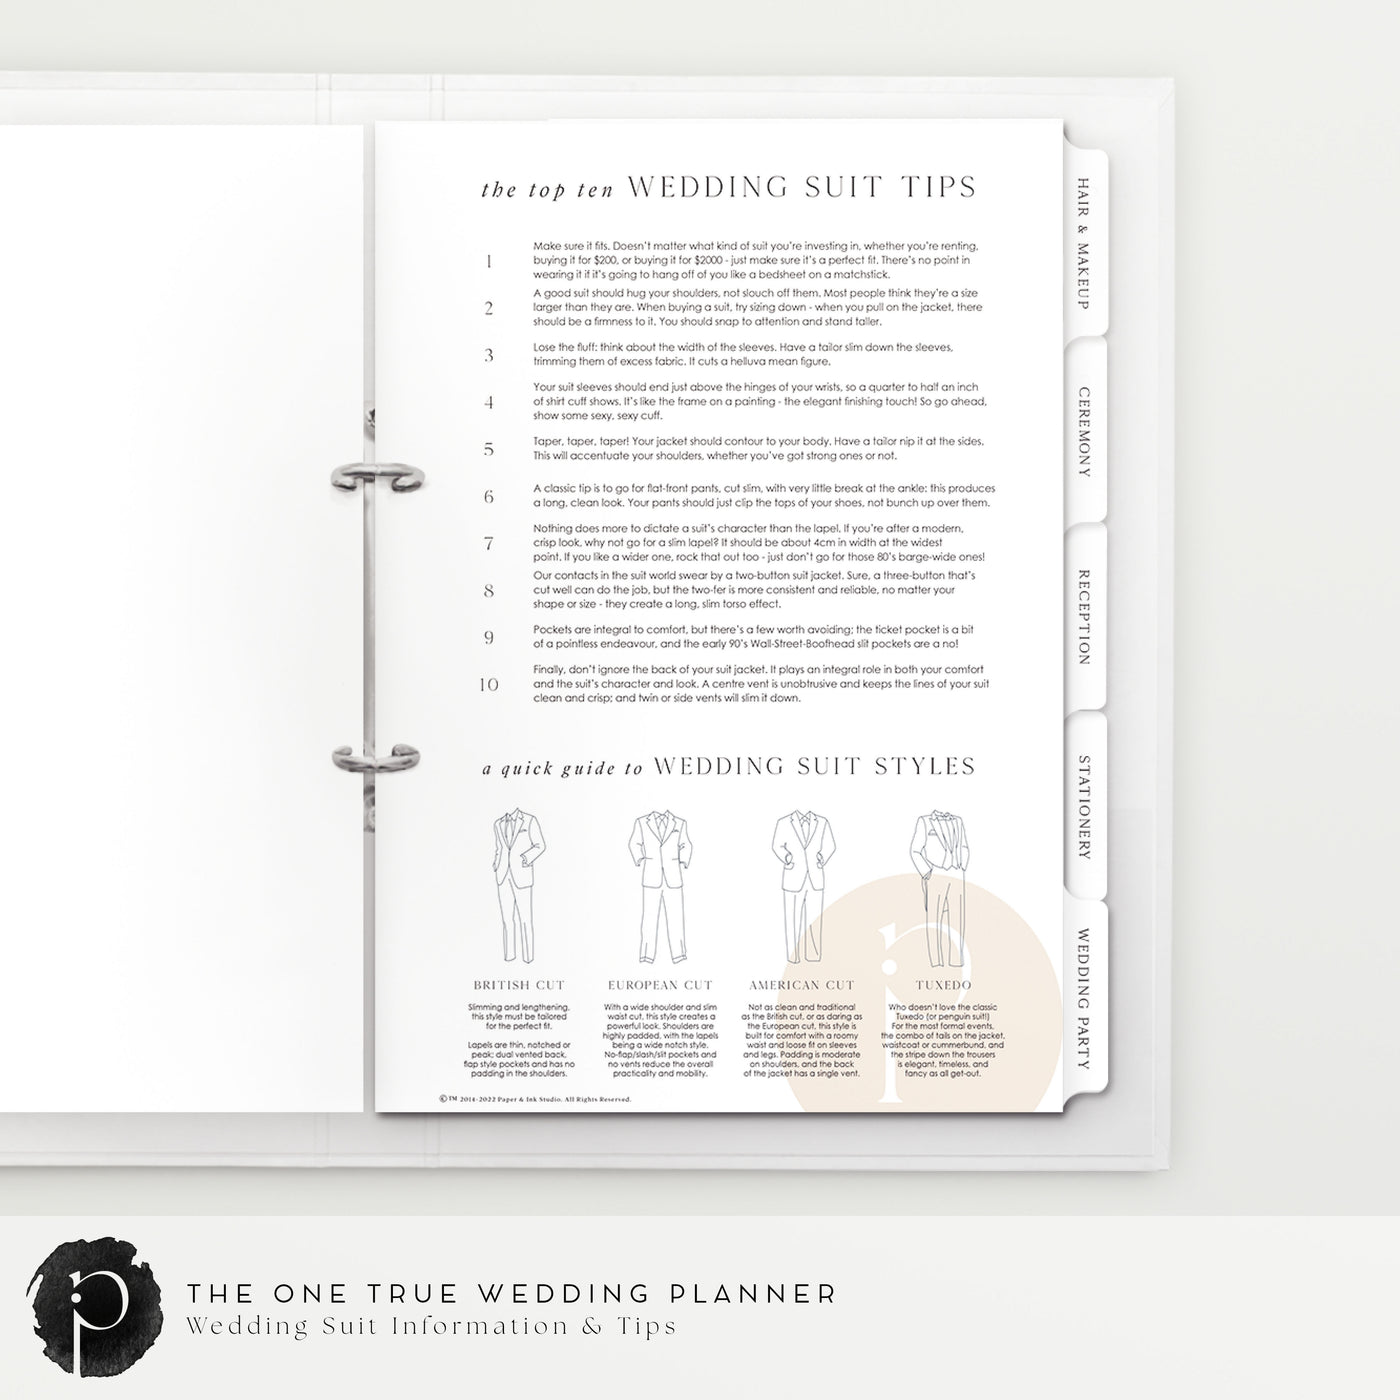 Personalised Wedding Planner & Organiser - Ultimate Guide w Checklists – Demeter